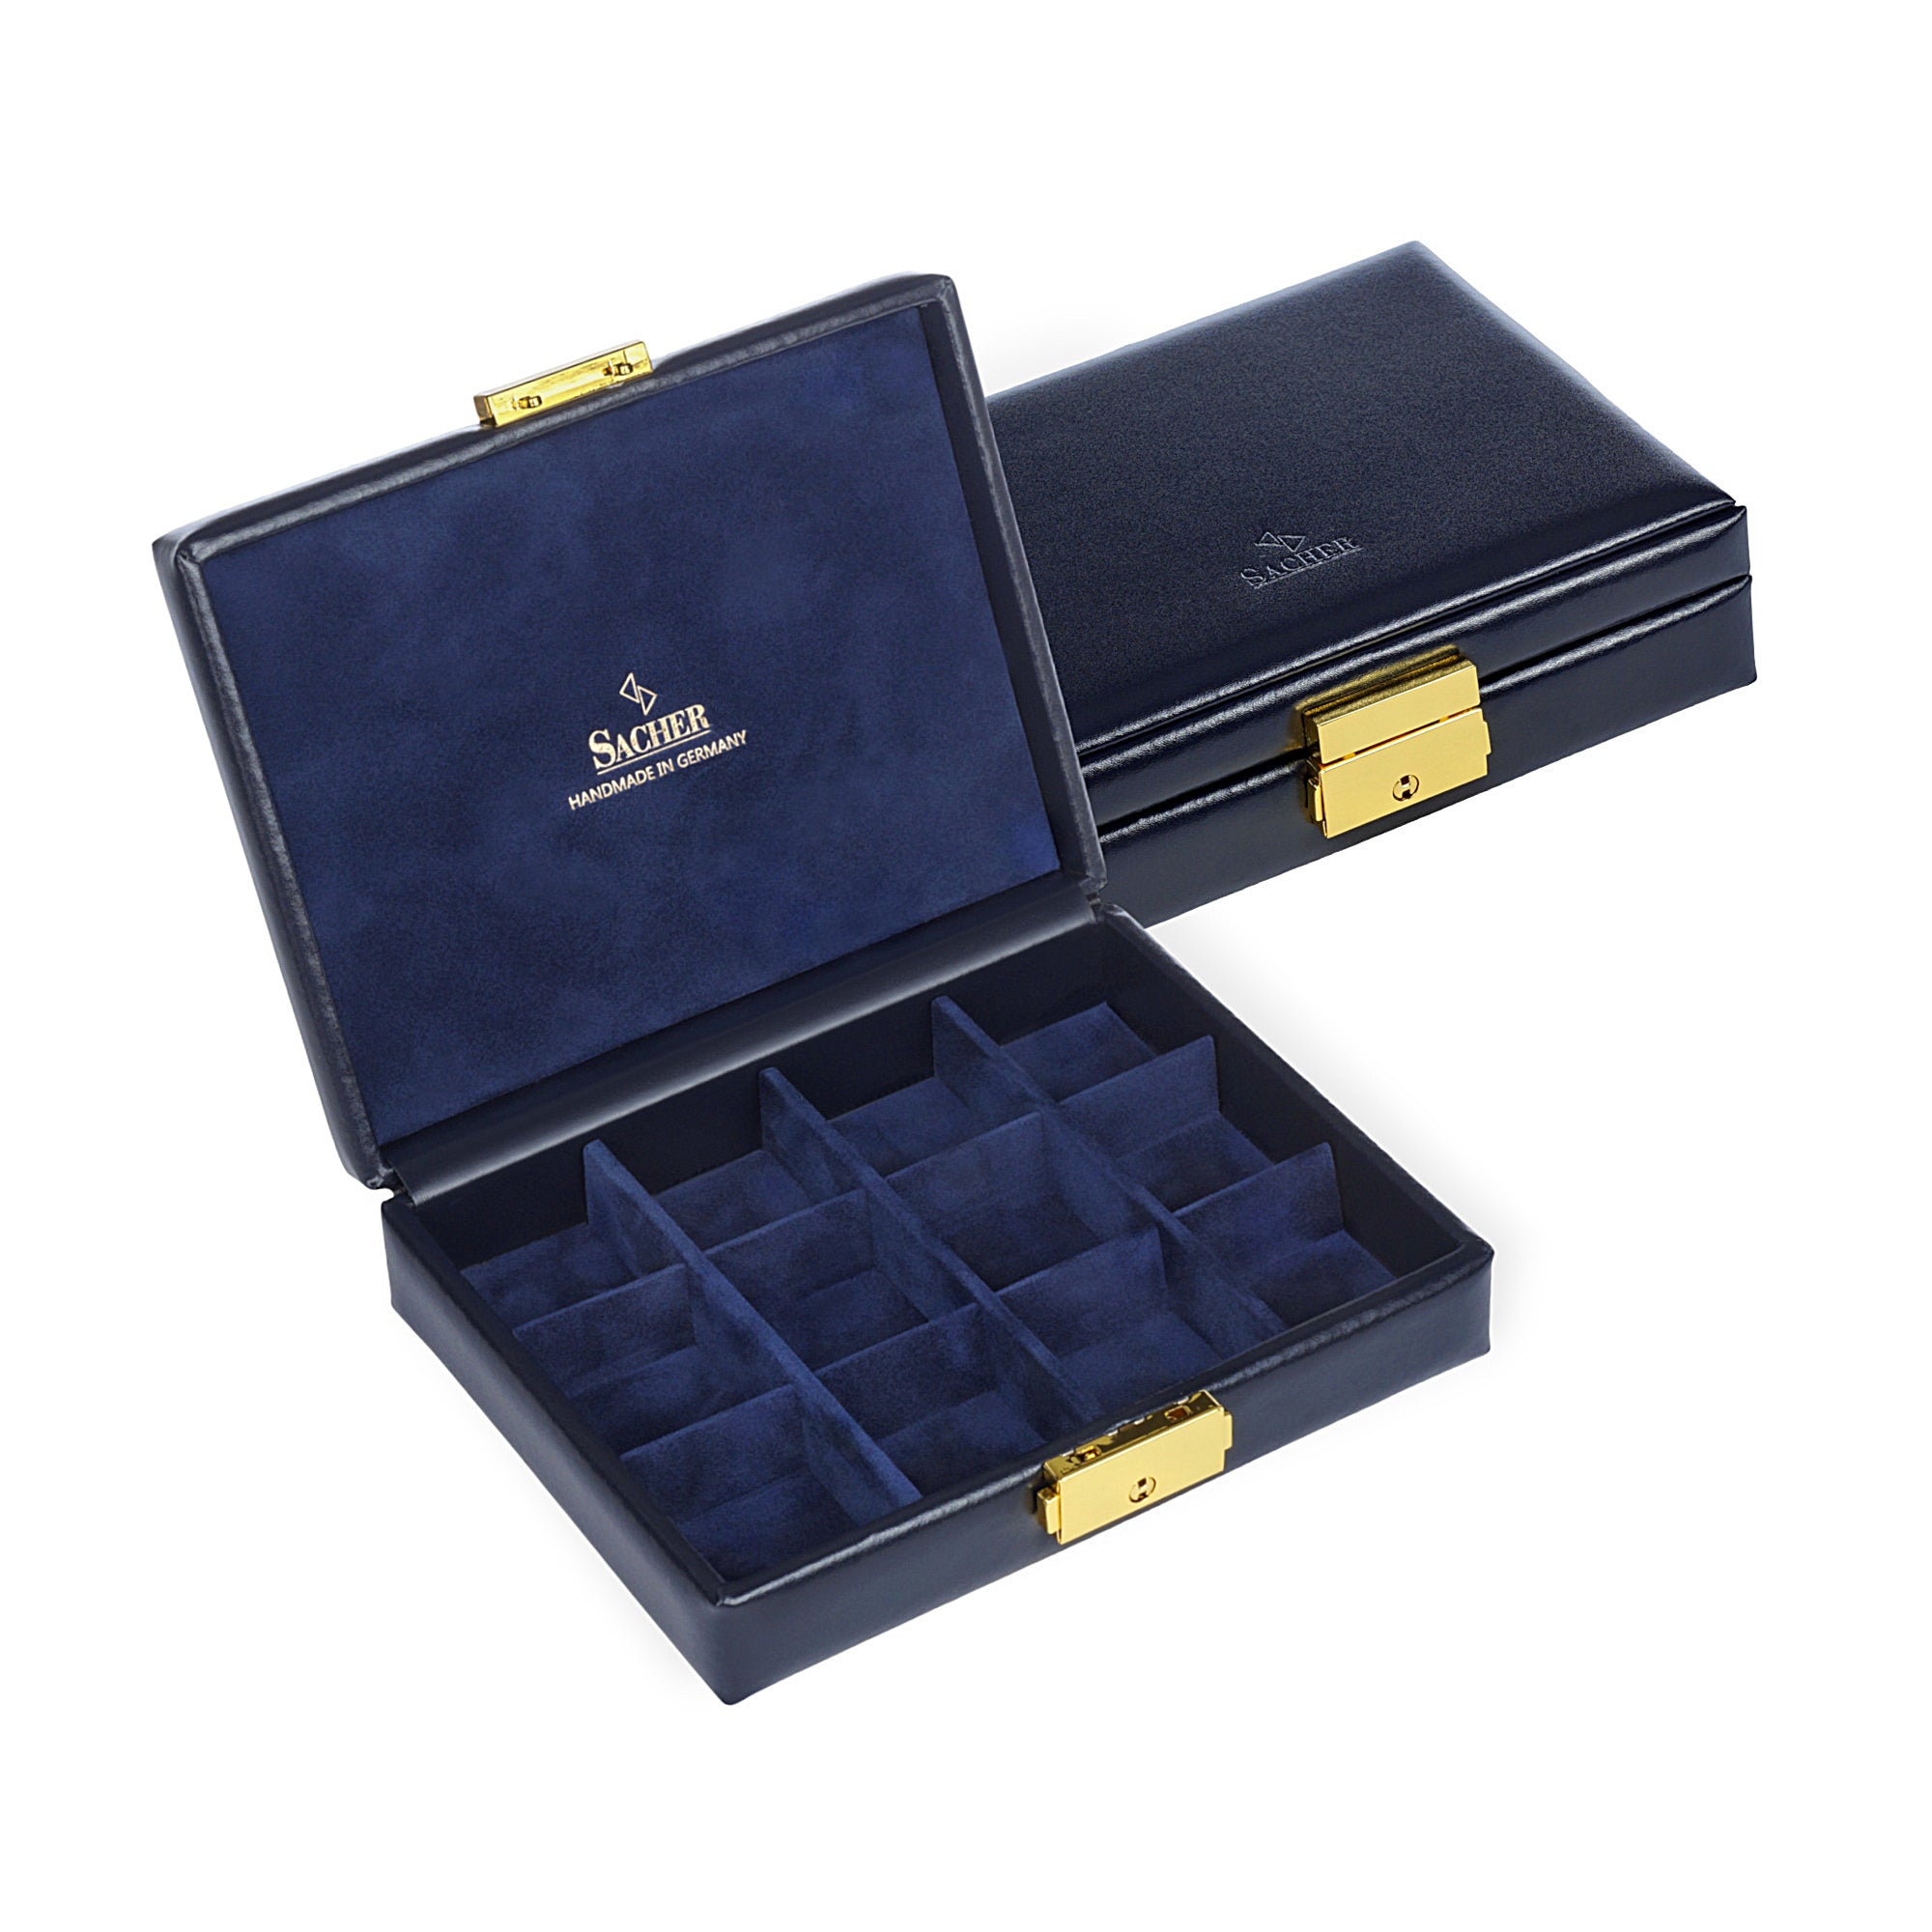 Offizieller Manufaktur | (leather) – Store / navy acuro box 1846 SACHER